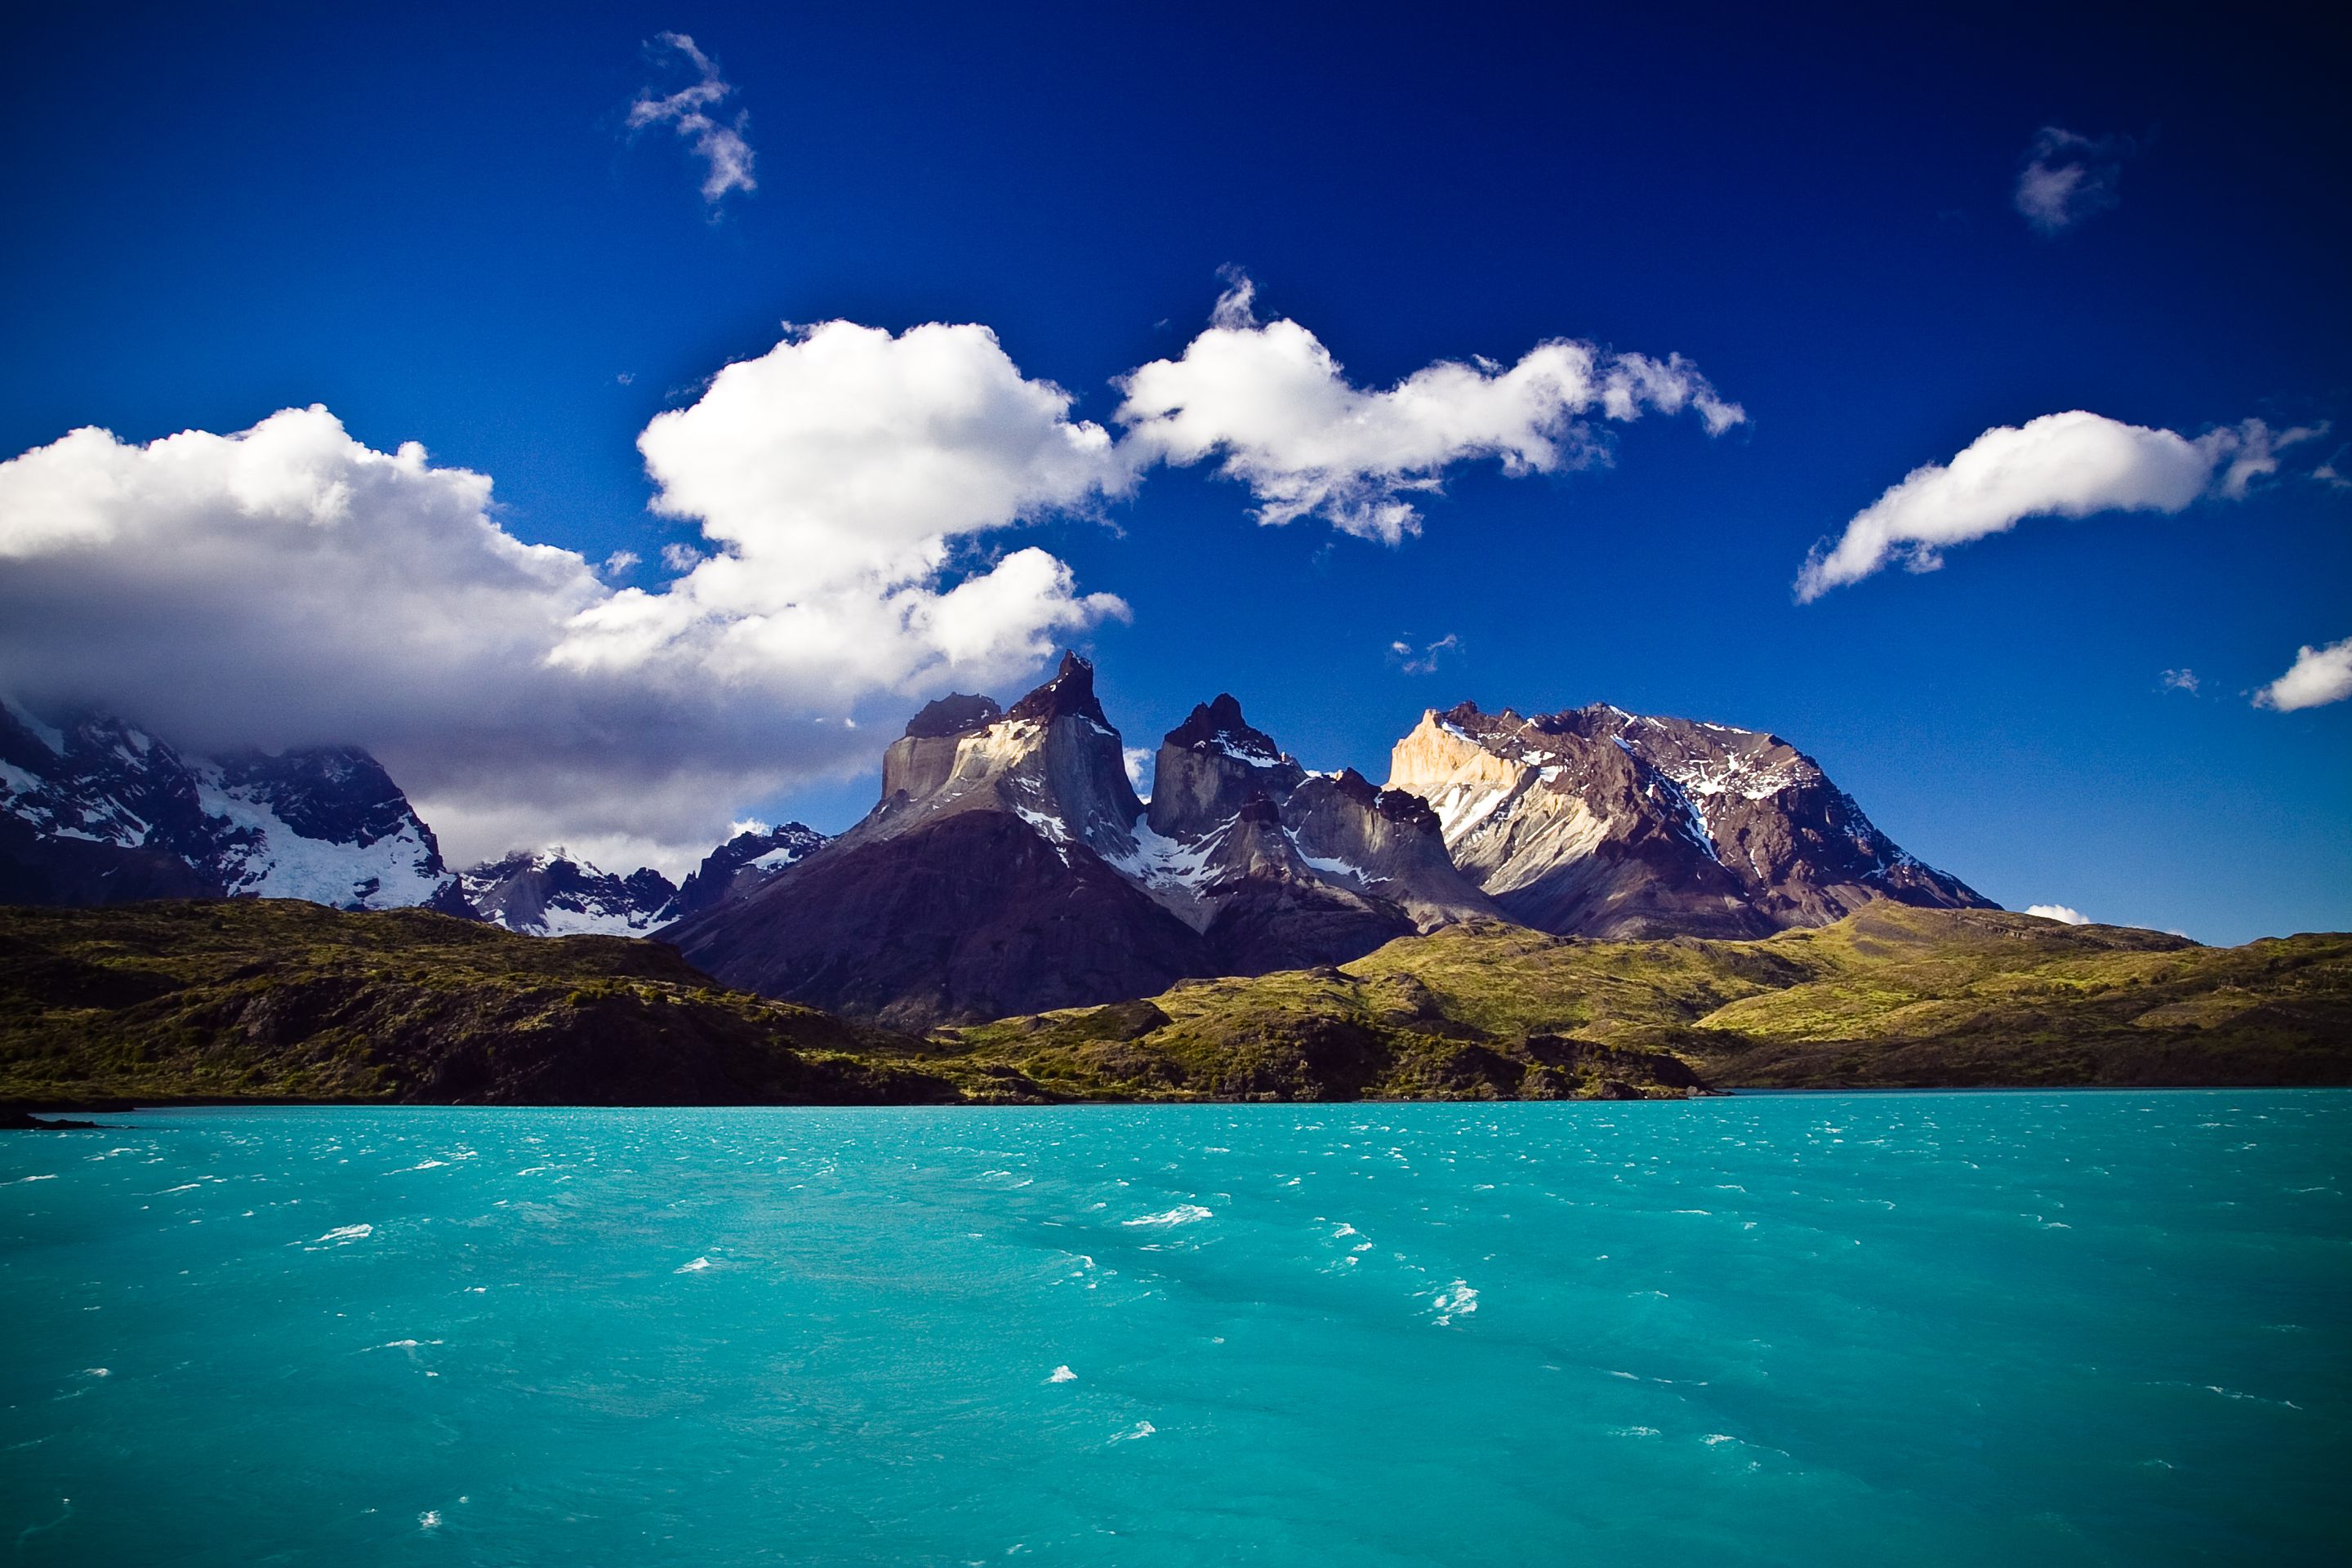 4 Torres del Paine HD Wallpapers | Backgrounds - Wallpaper ...